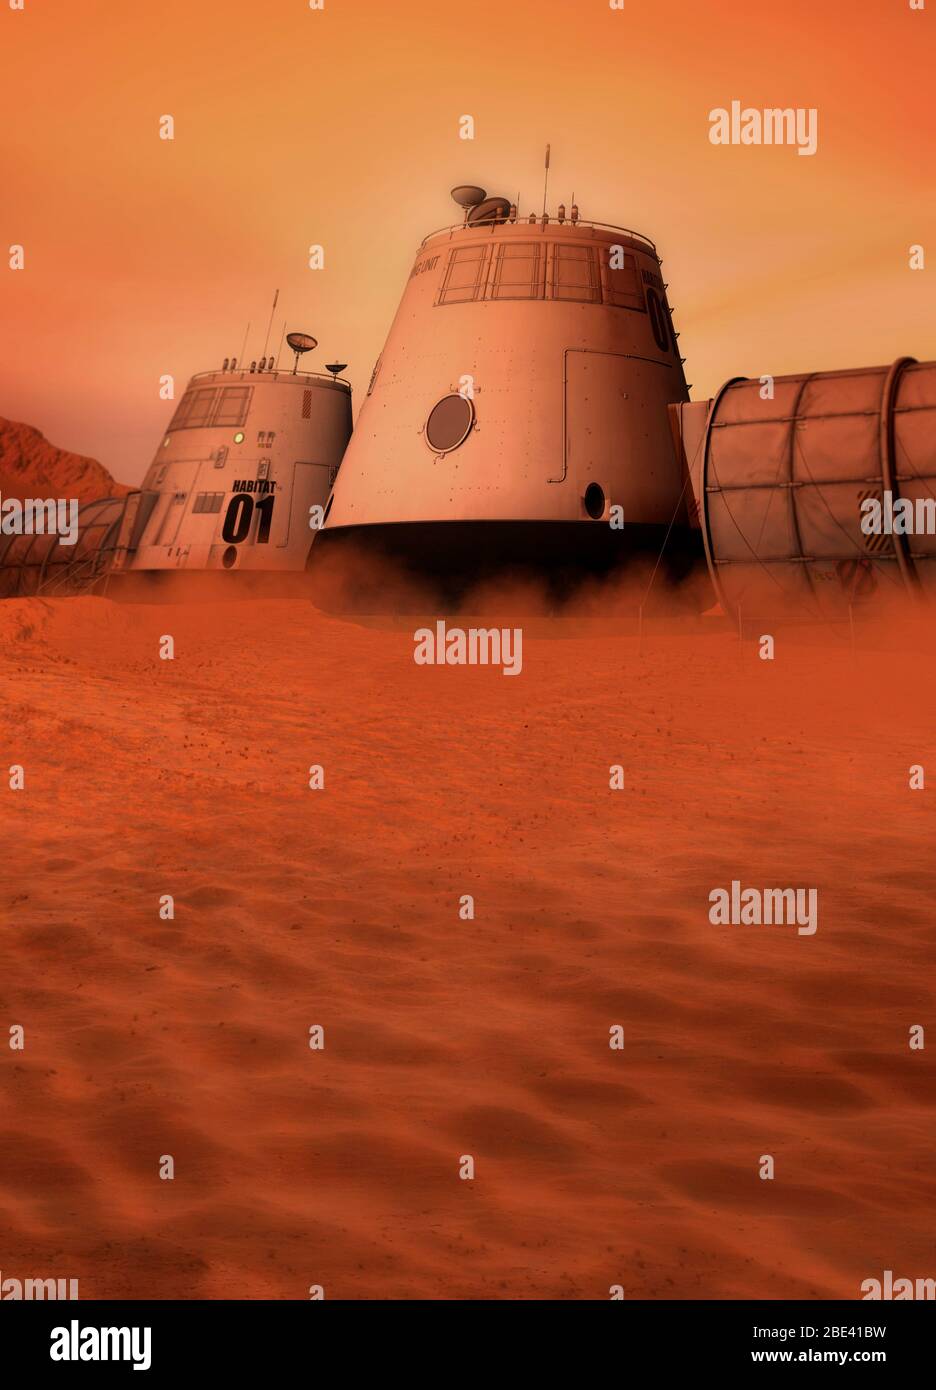 Buildings on Mars, illustration. Stock Photo